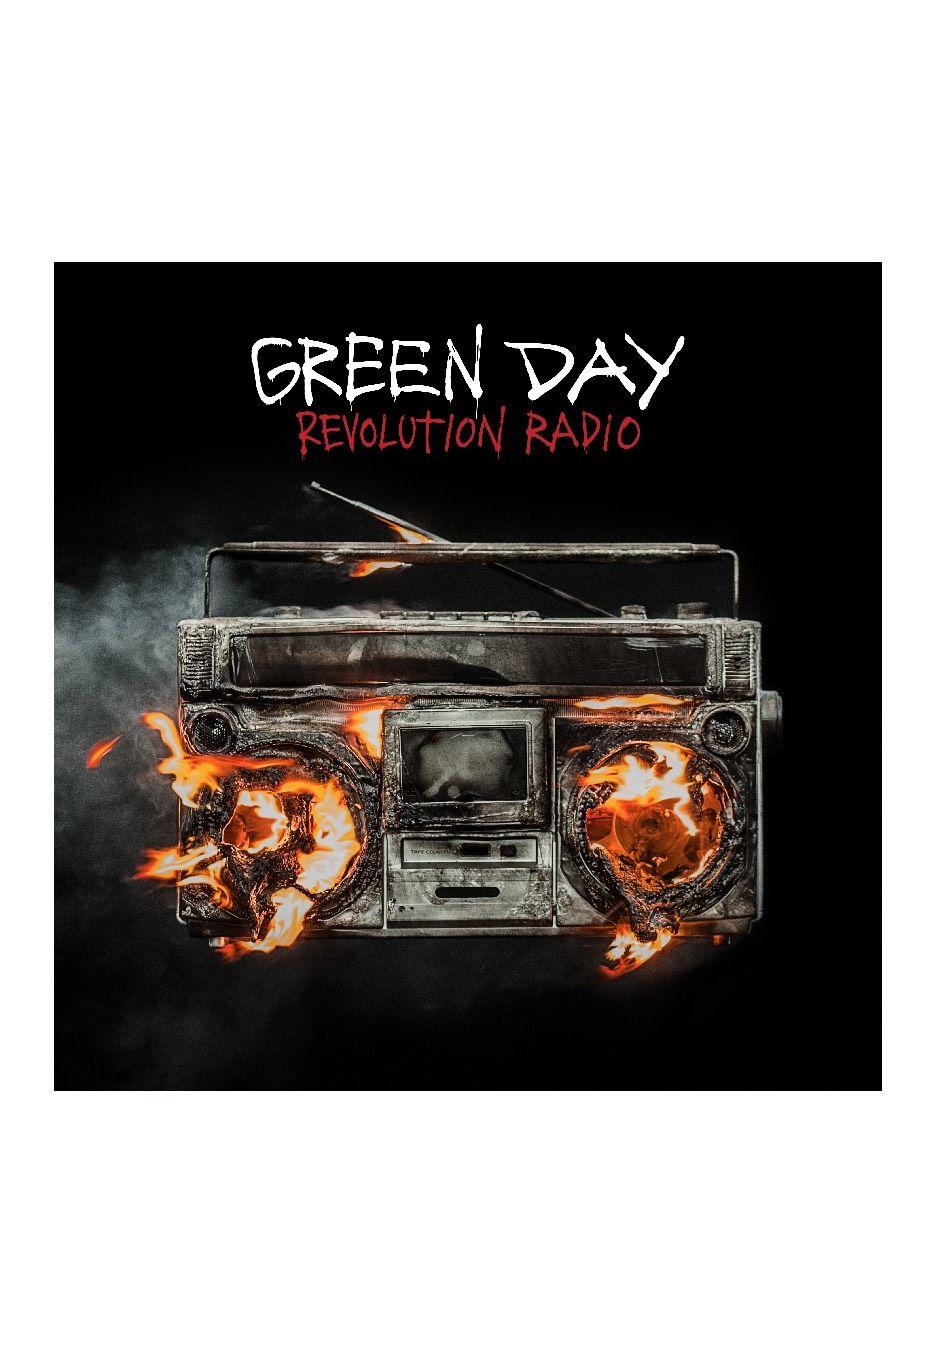 Green Day Revolution Radio Logo - Green Day - Revolution Radio - CD - CDs, Vinyl and DVDs of your ...